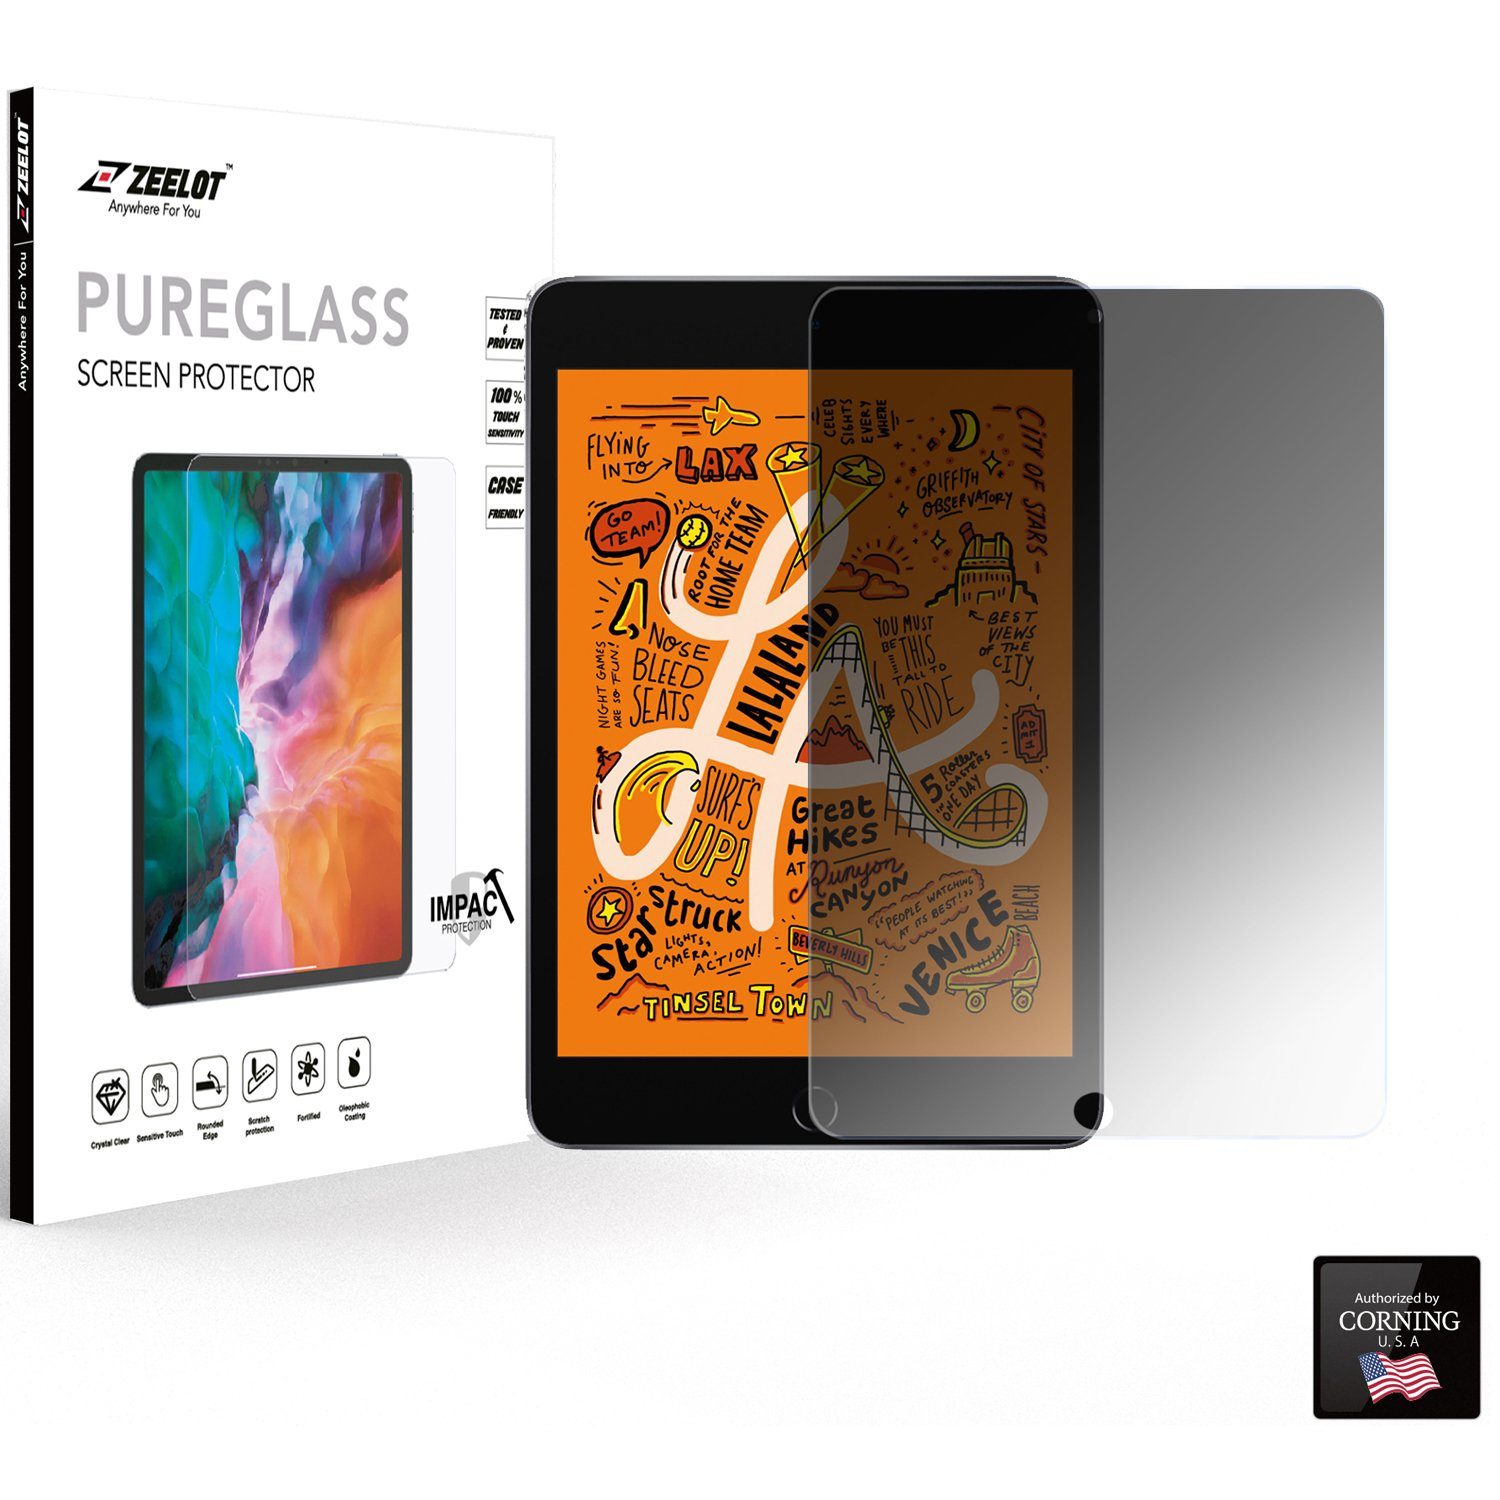 ZEELOT PureGlass 2.5D Privacy Corning Tempered Glass Screen Protector for iPad Mini 5/4 7.9" (2019-2015) Default Zeelot 